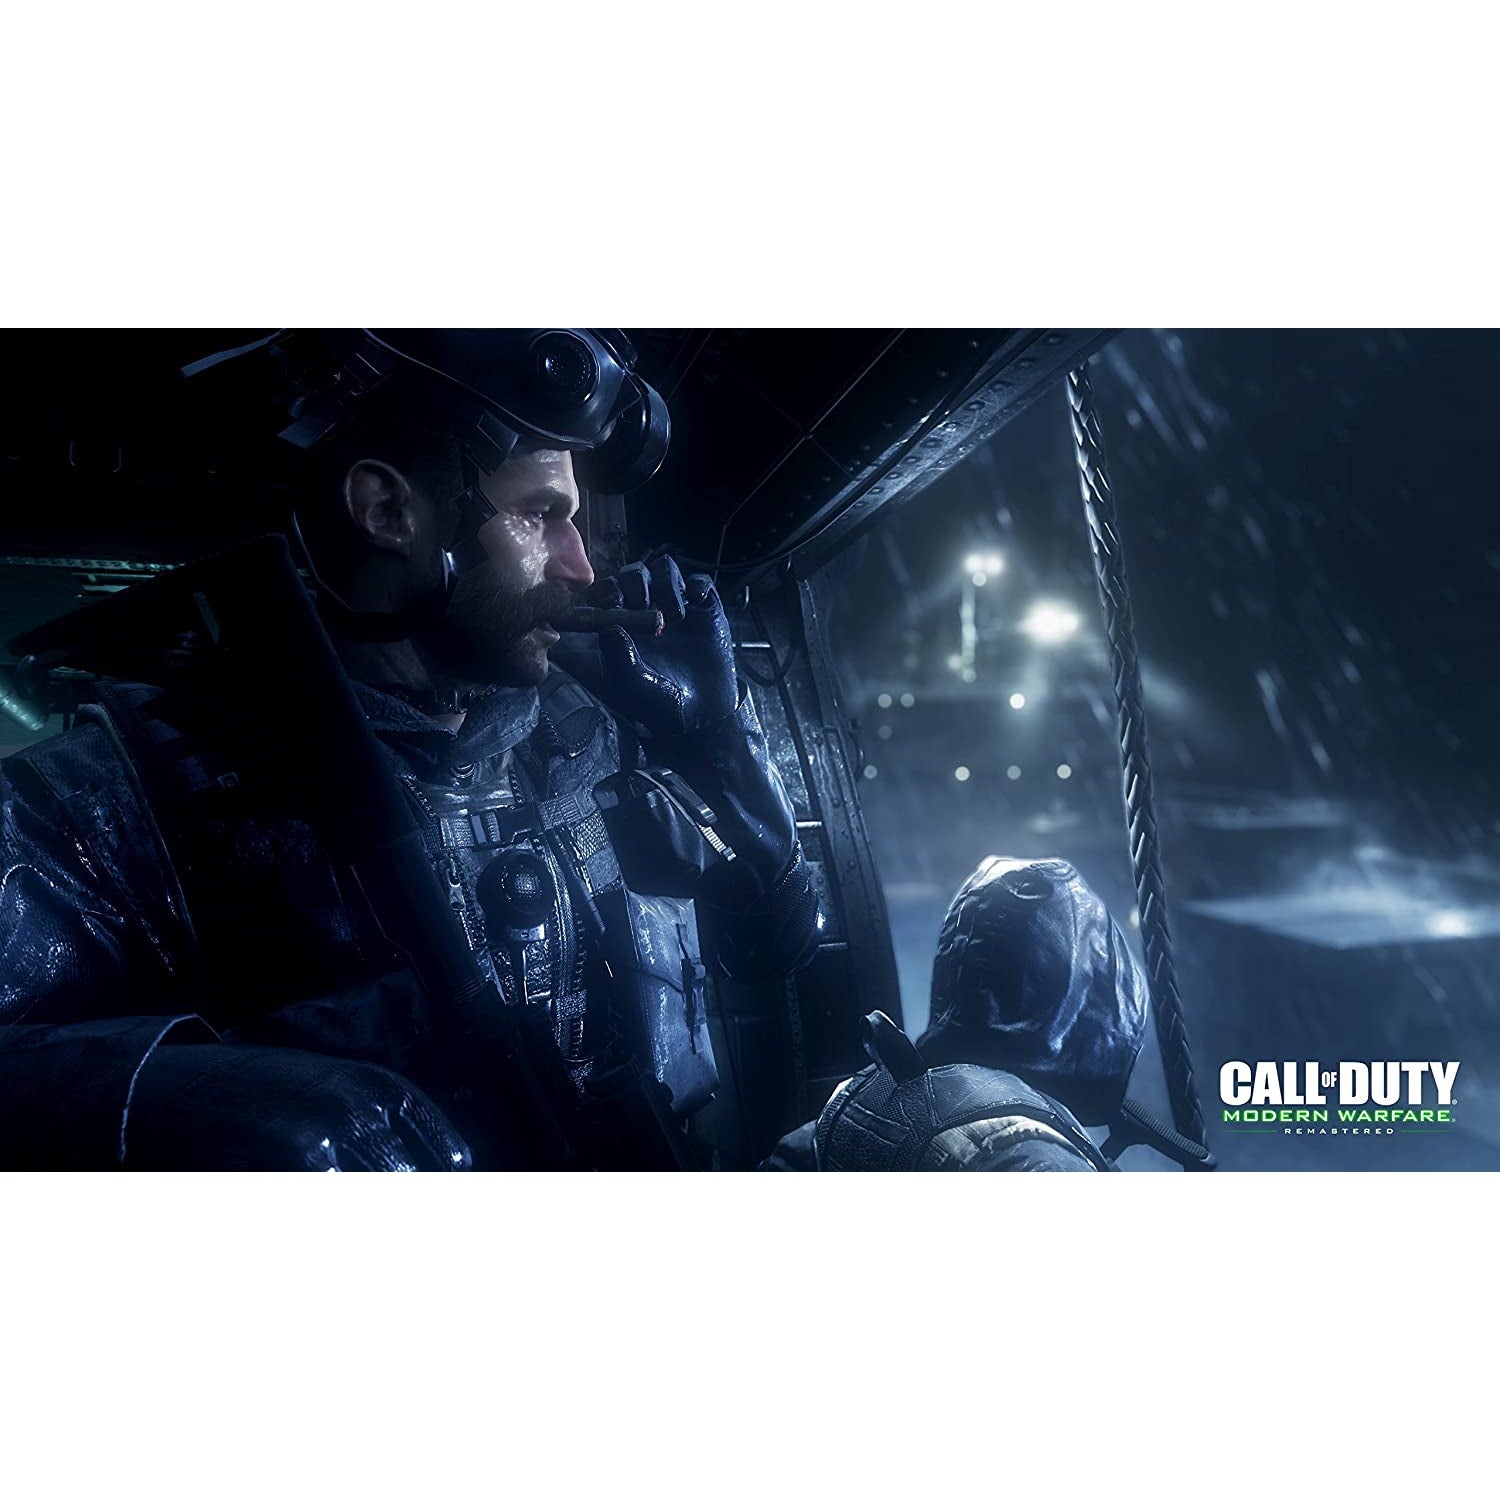 Call Of Duty: Infinite Warfare (PS4) - Refurbished Pristine